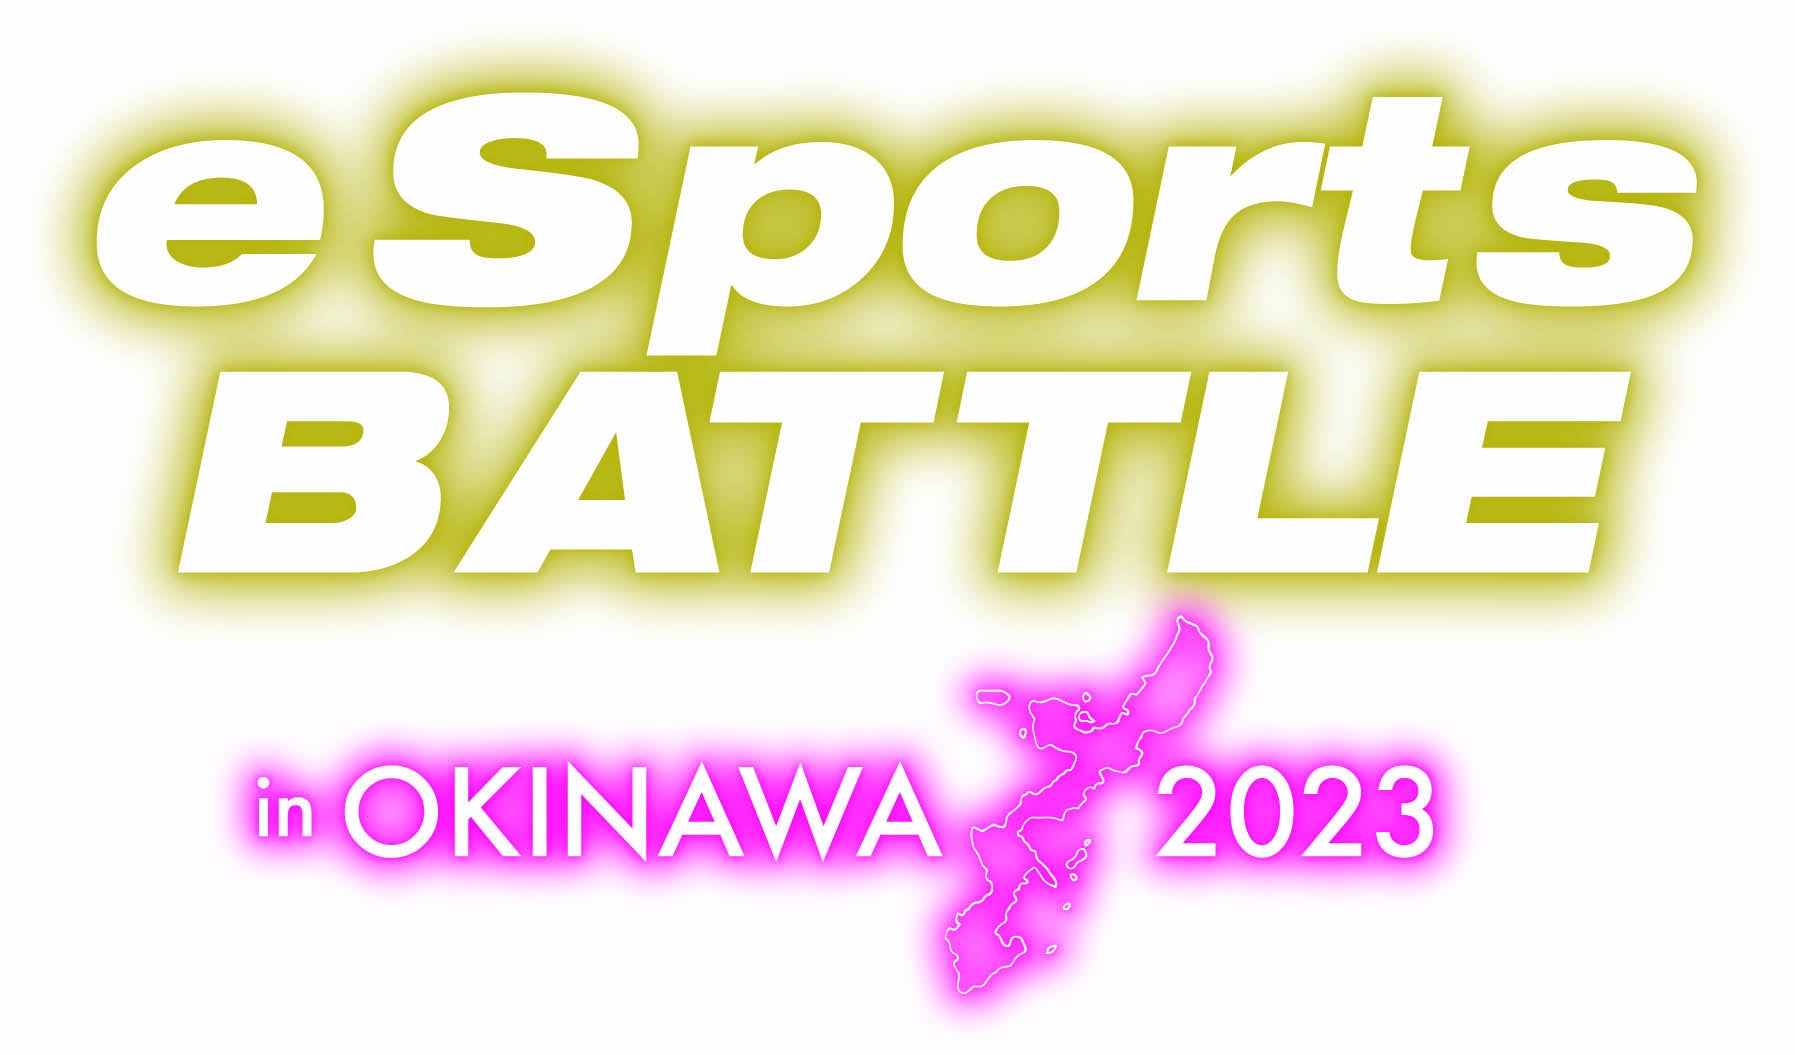 「eSports BATTLE in OKINAWA 2023」バーチャルサイクリング部門の結果について